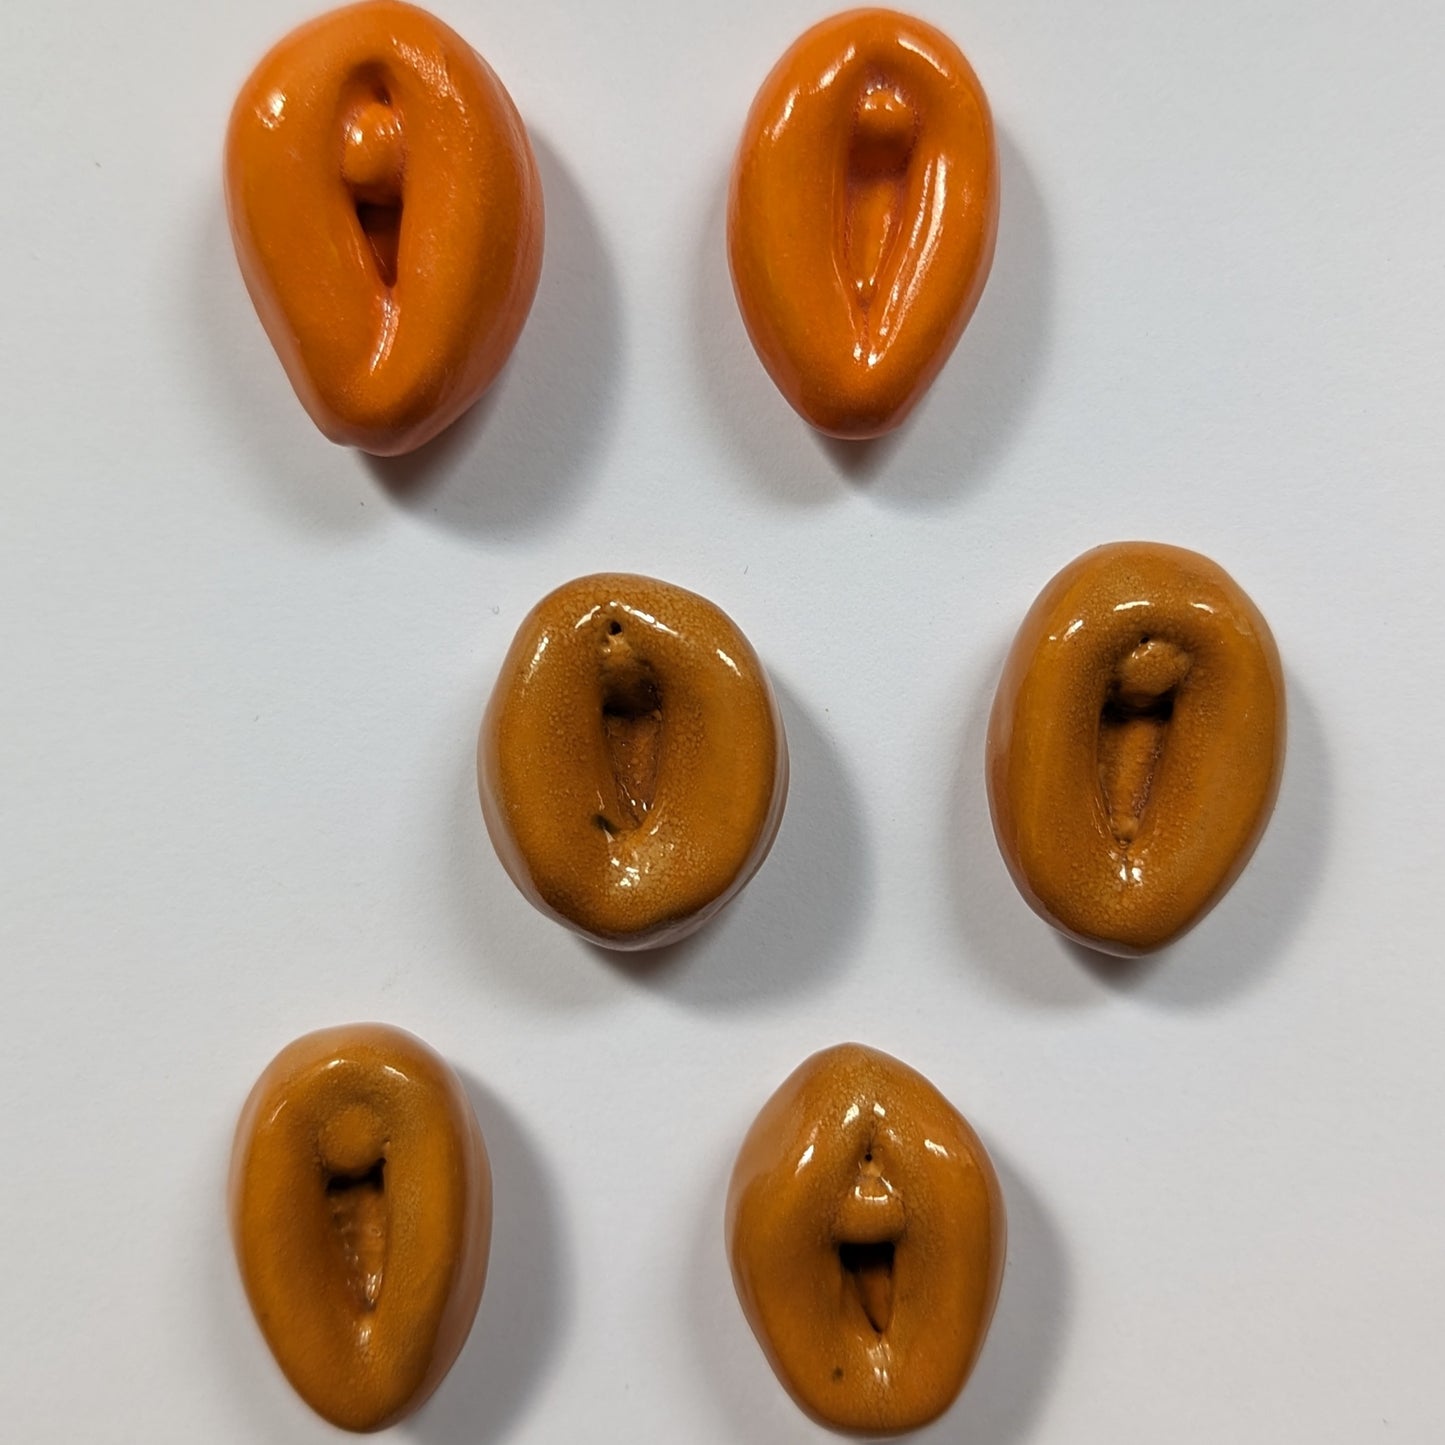 Vulva Magnets